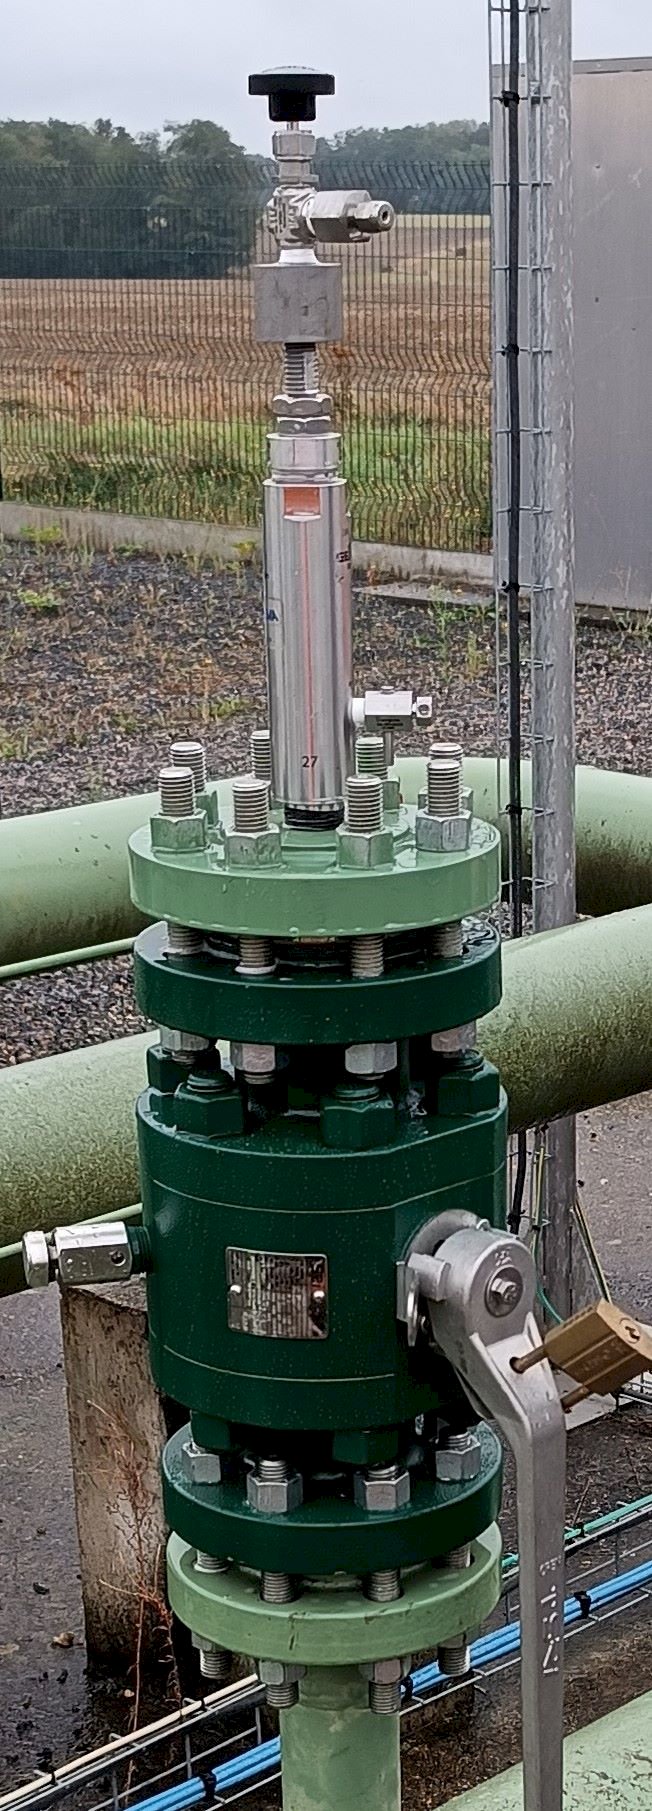 GENIE 750 sampling probe installed on gas site